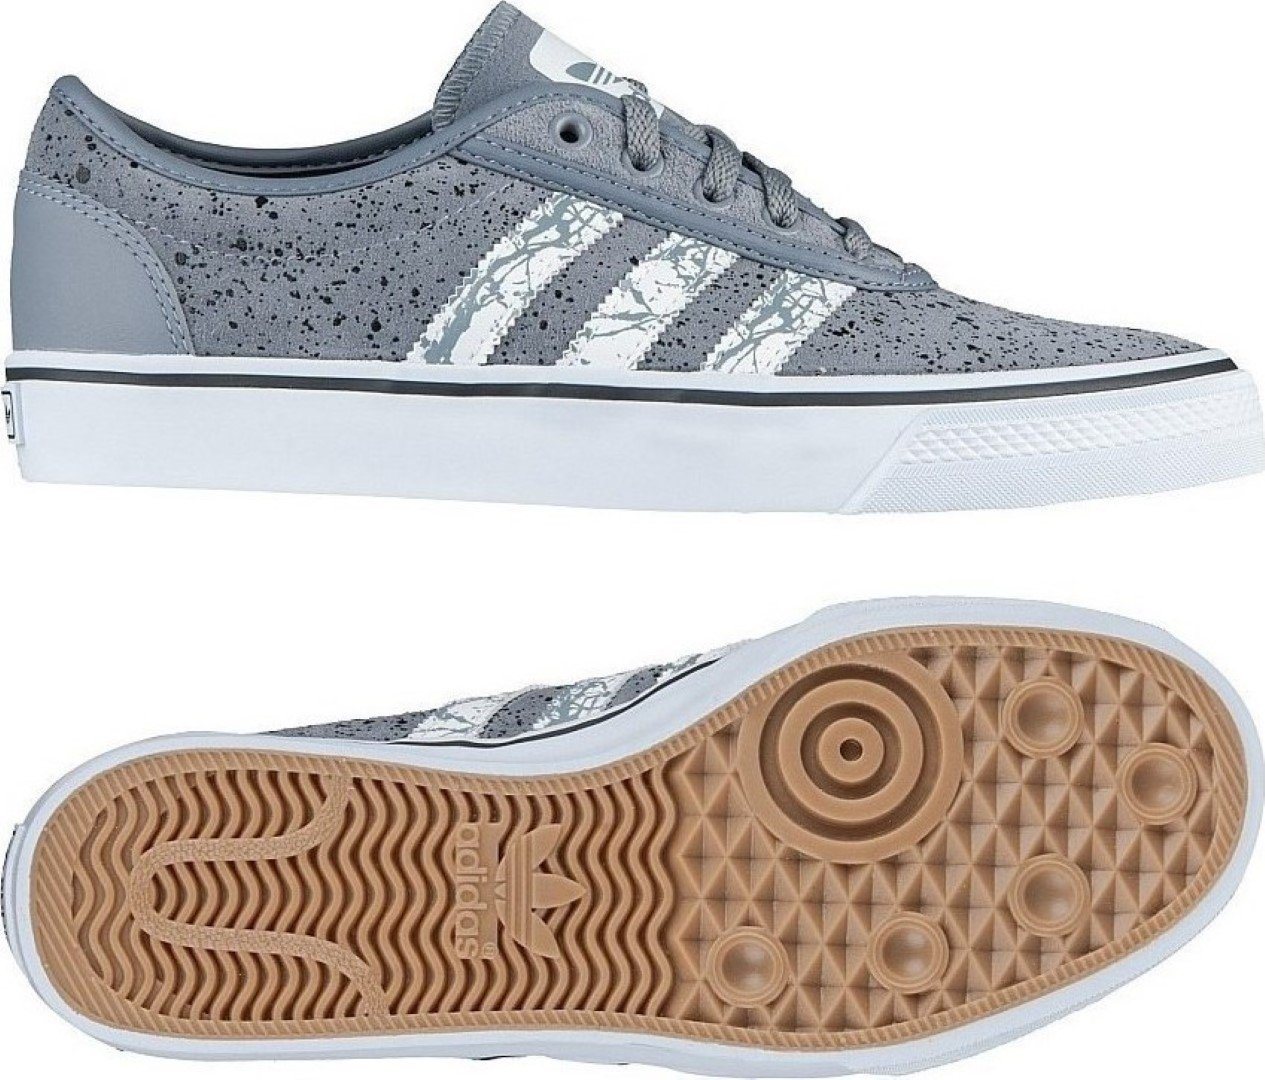 adidas Originals ADI-EASE C75615 Skateschuh Sneaker Grau gepunktet Skateboard von adidas Originals